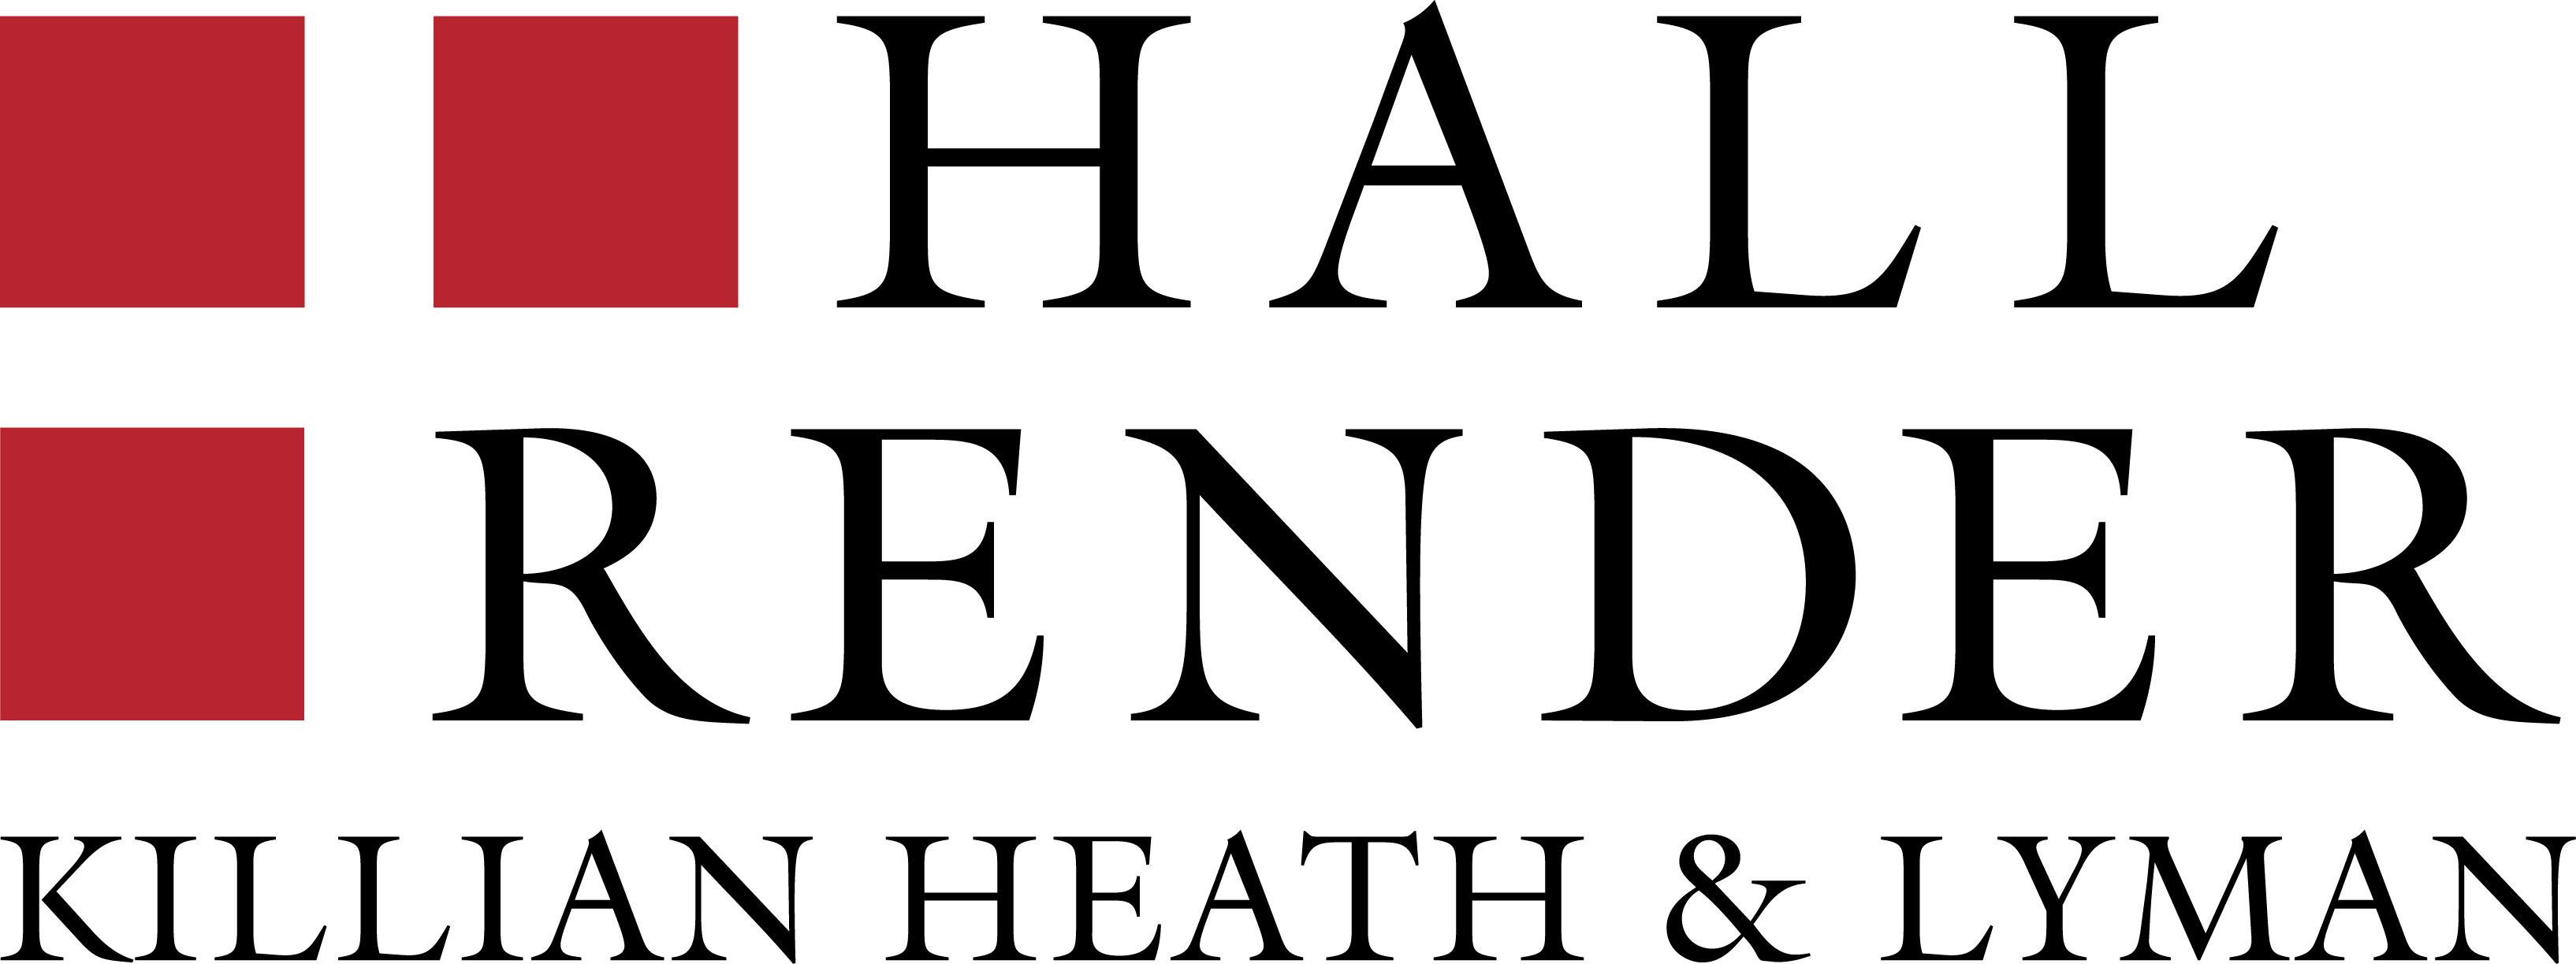 hall-render-logo-highres-004.jpg